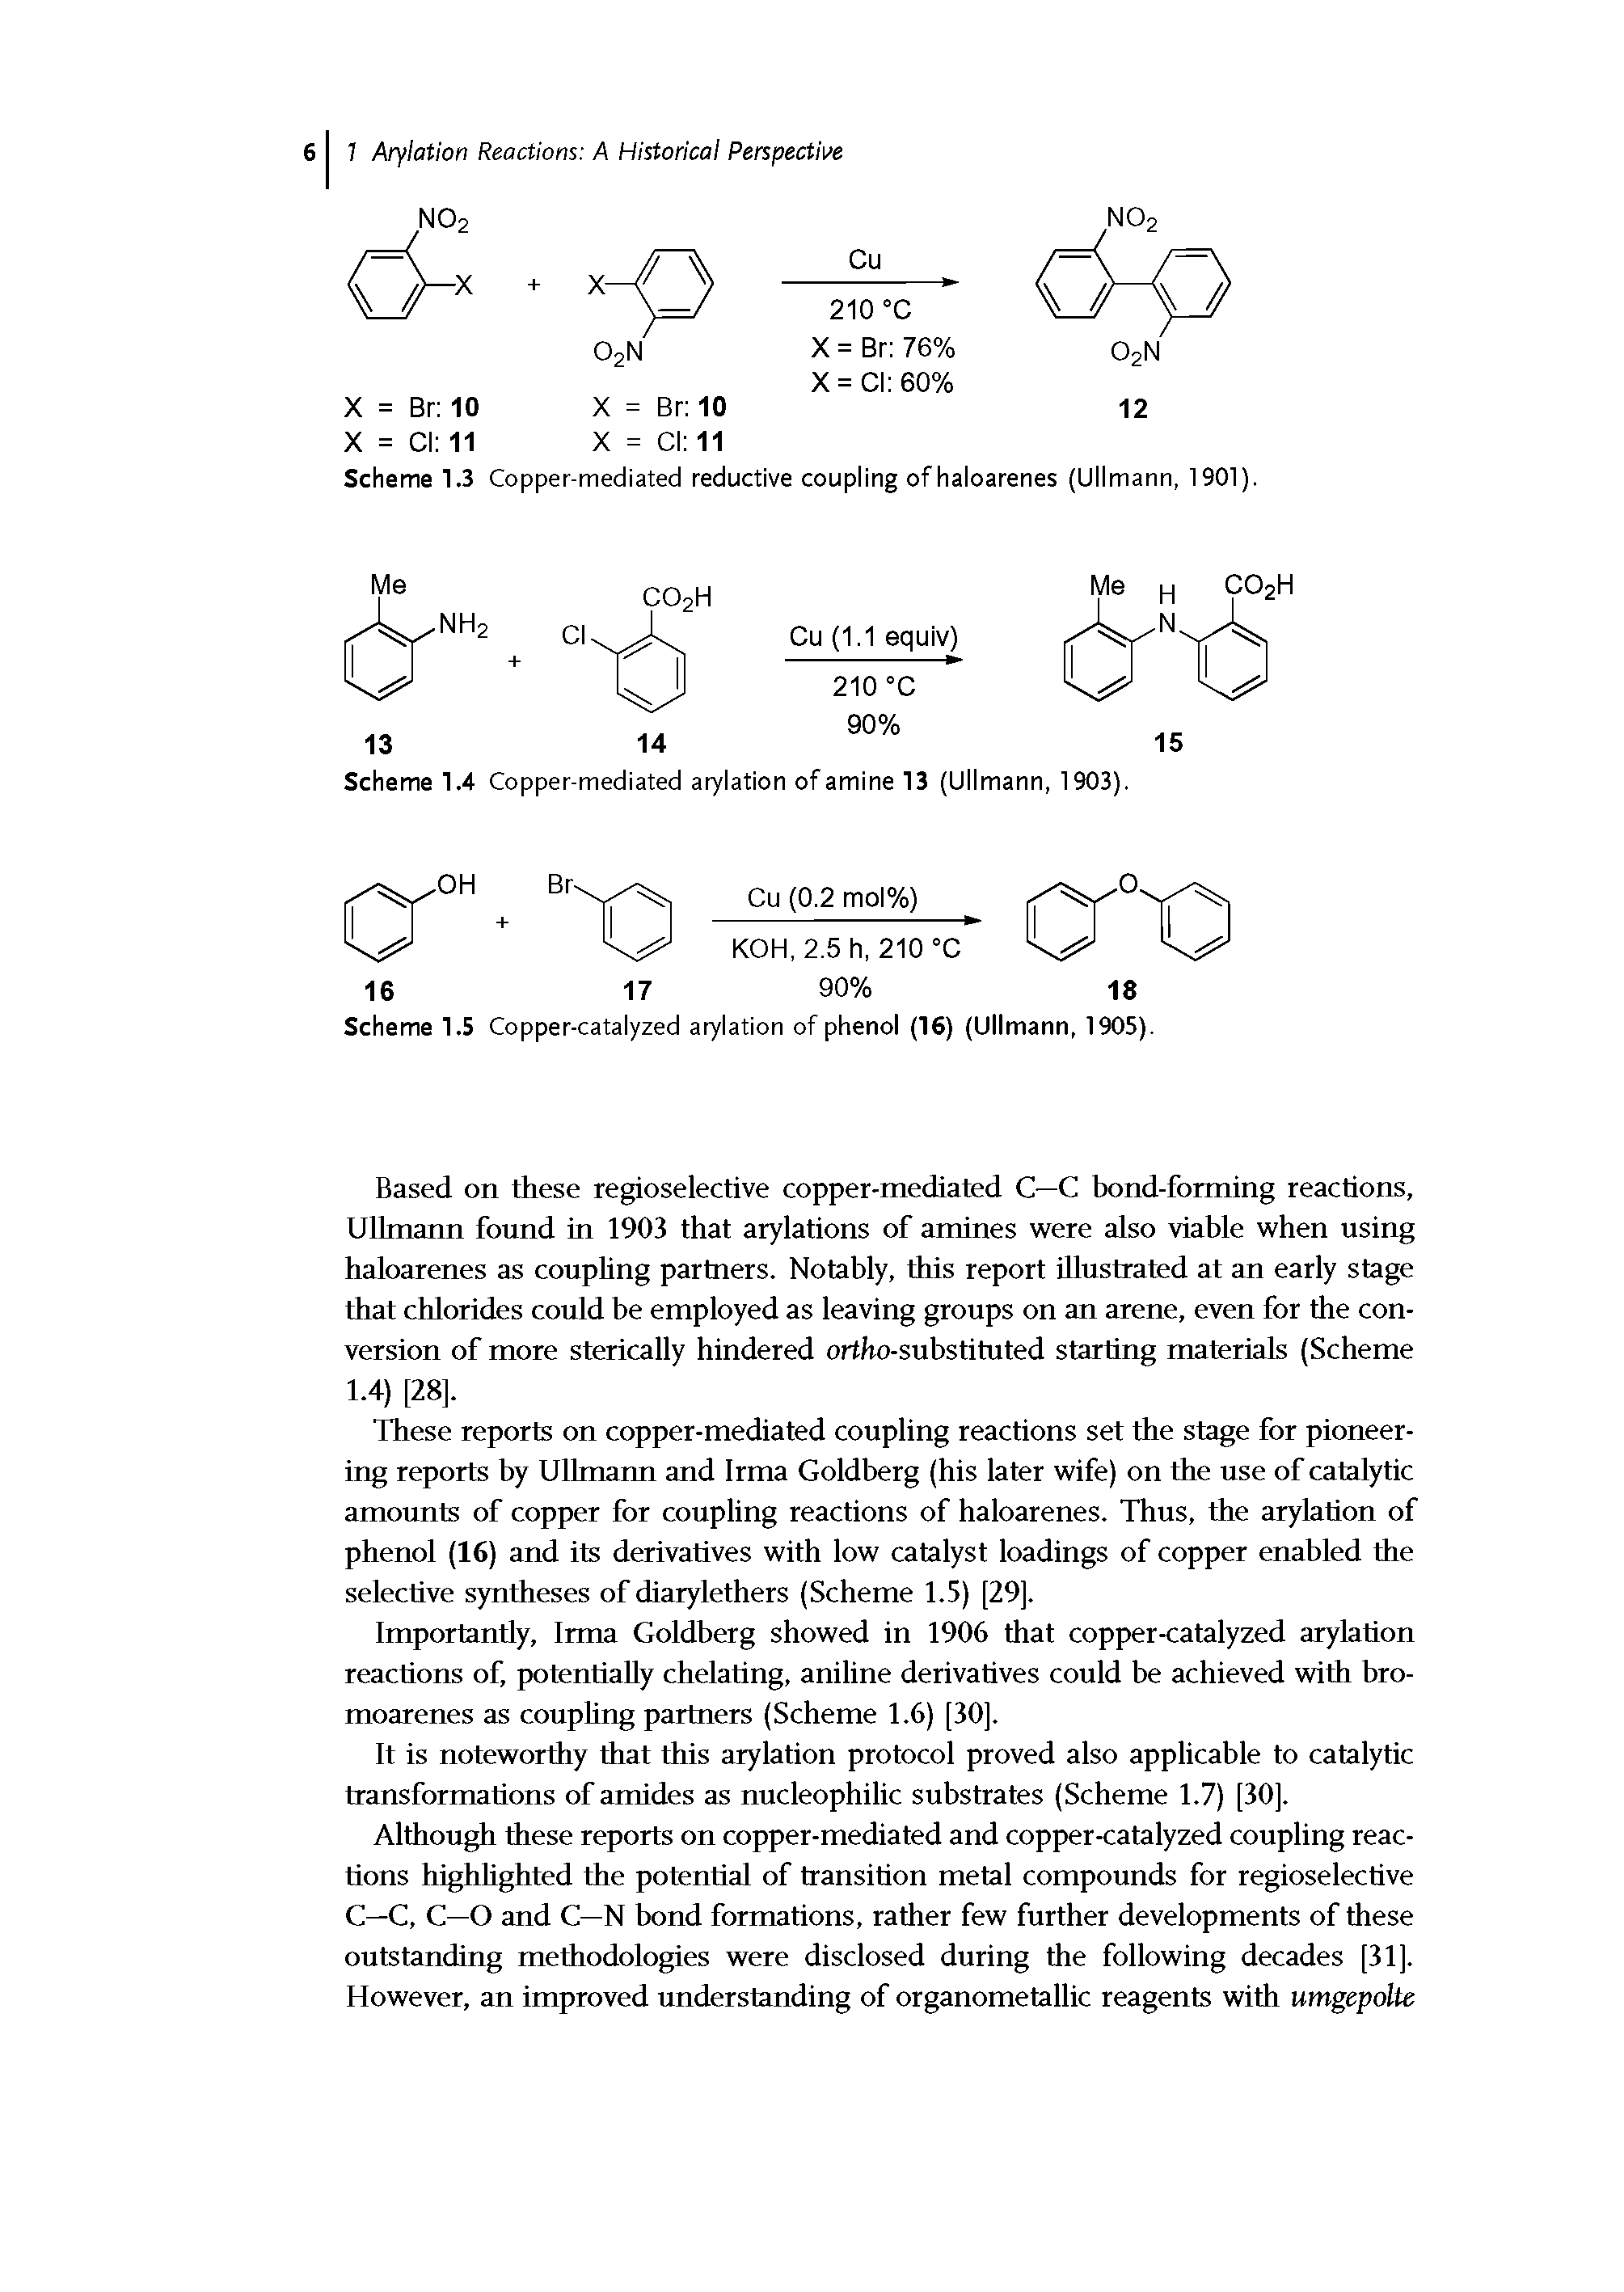 Scheme 1.5 Copper-catalyzed arylation of phenol (16) (Ullmann, 1905).